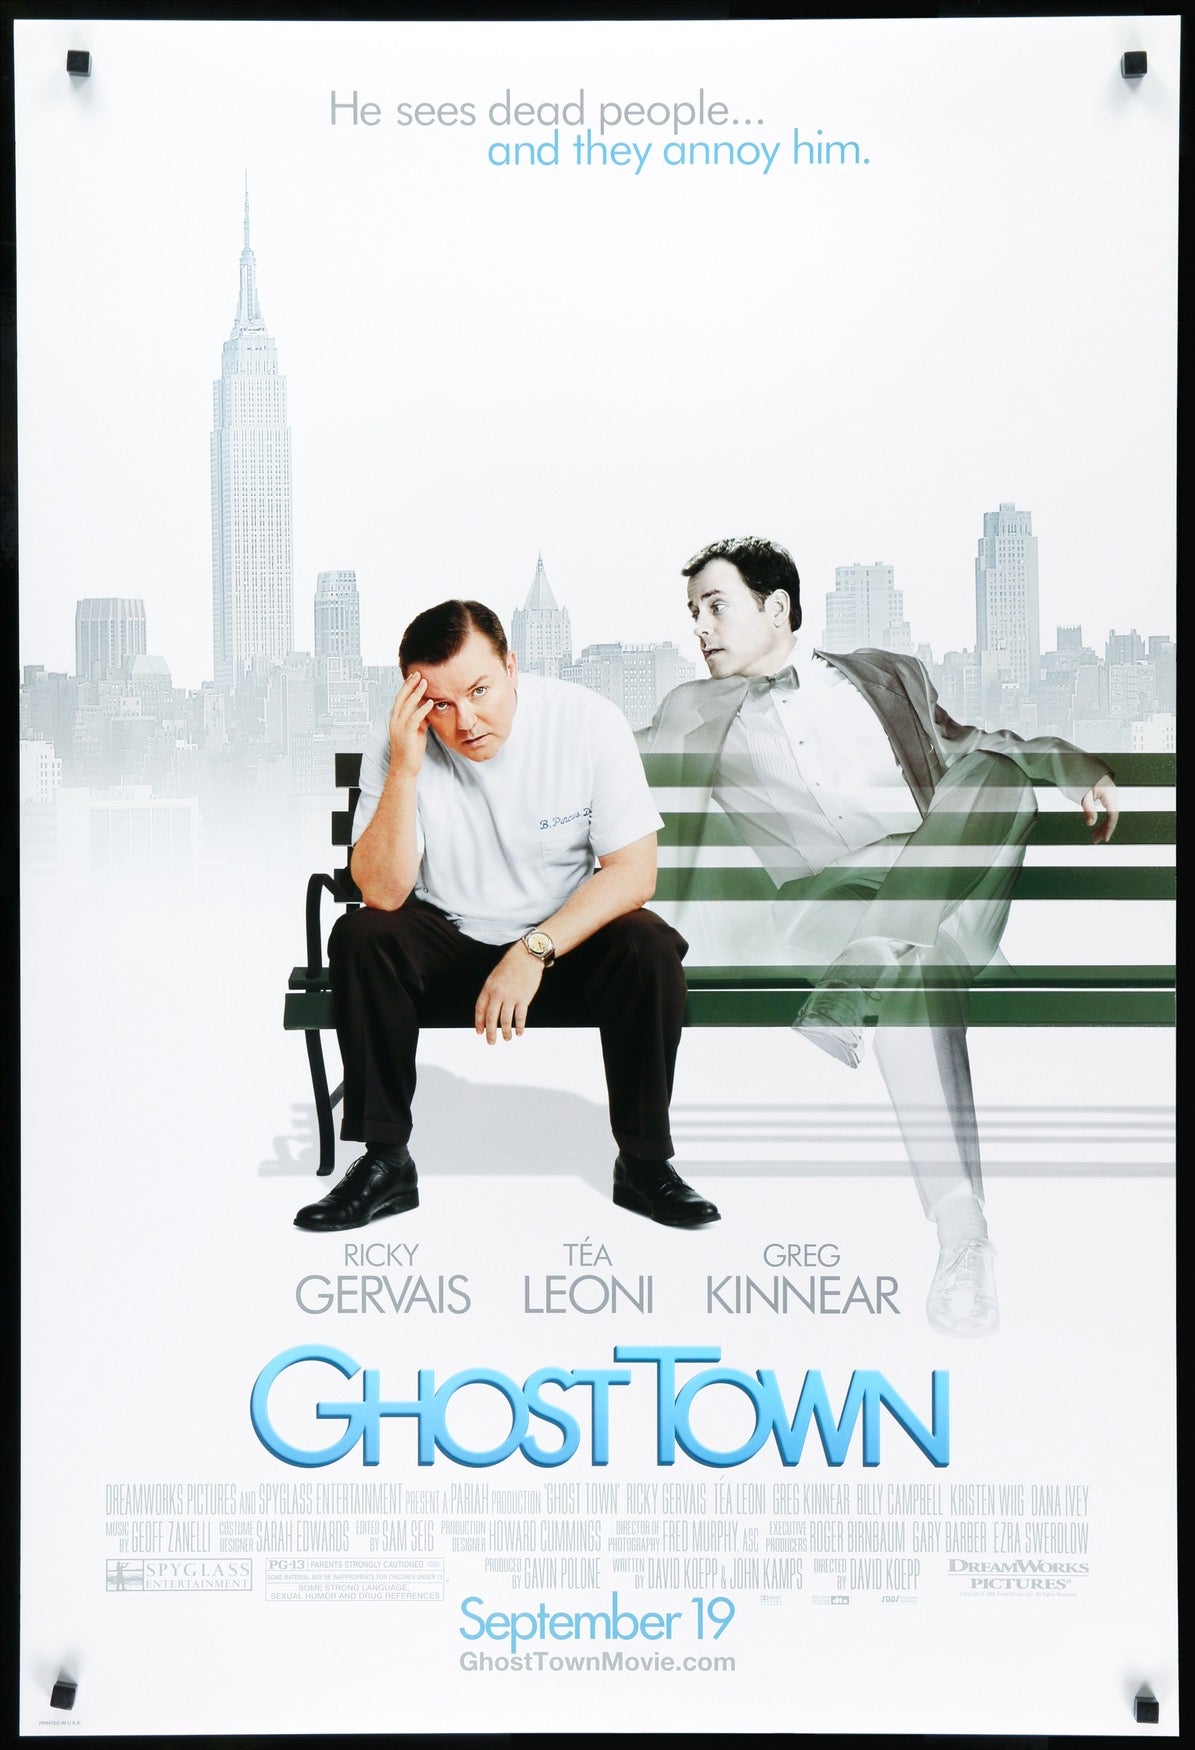 Ghost Town (2008) original movie poster for sale at Original Film Art